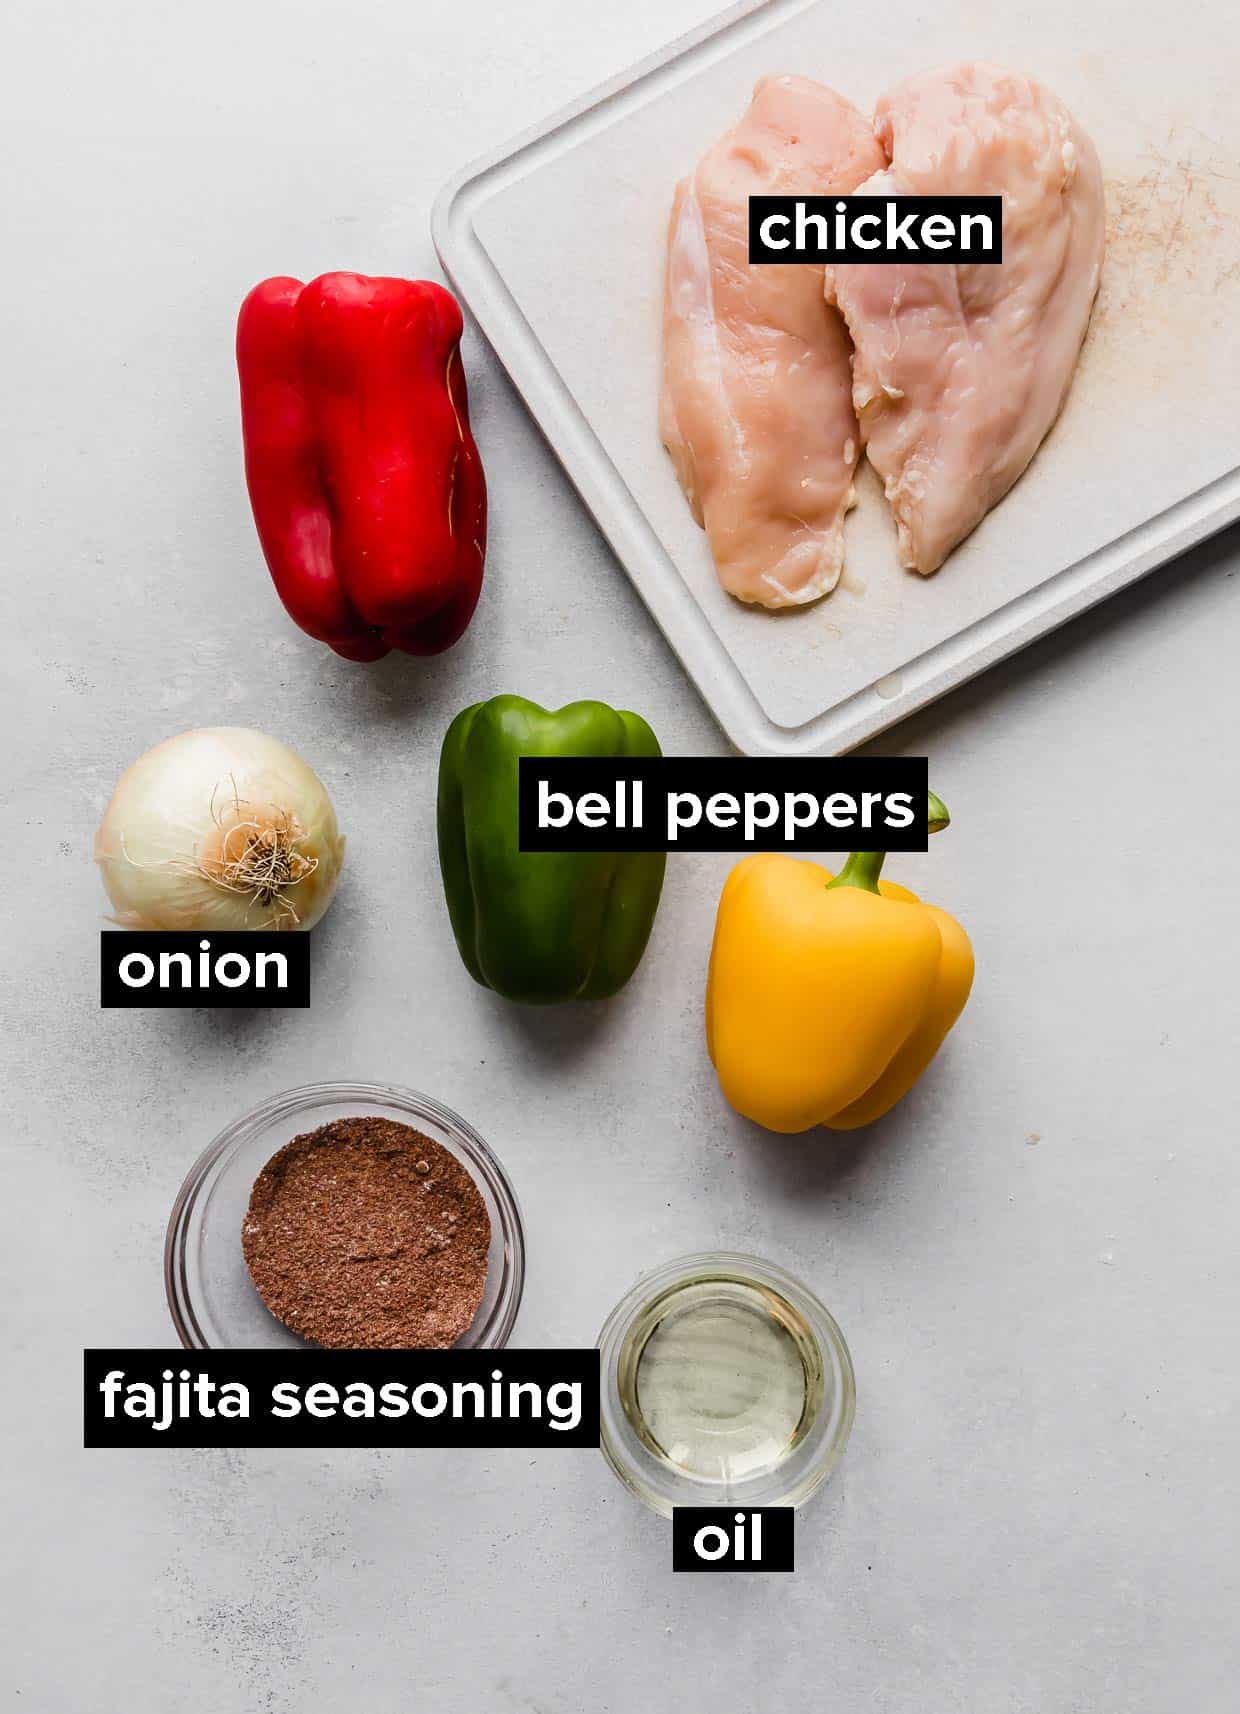 Ingredients used to make sheet pan chicken fajitas on a light background.